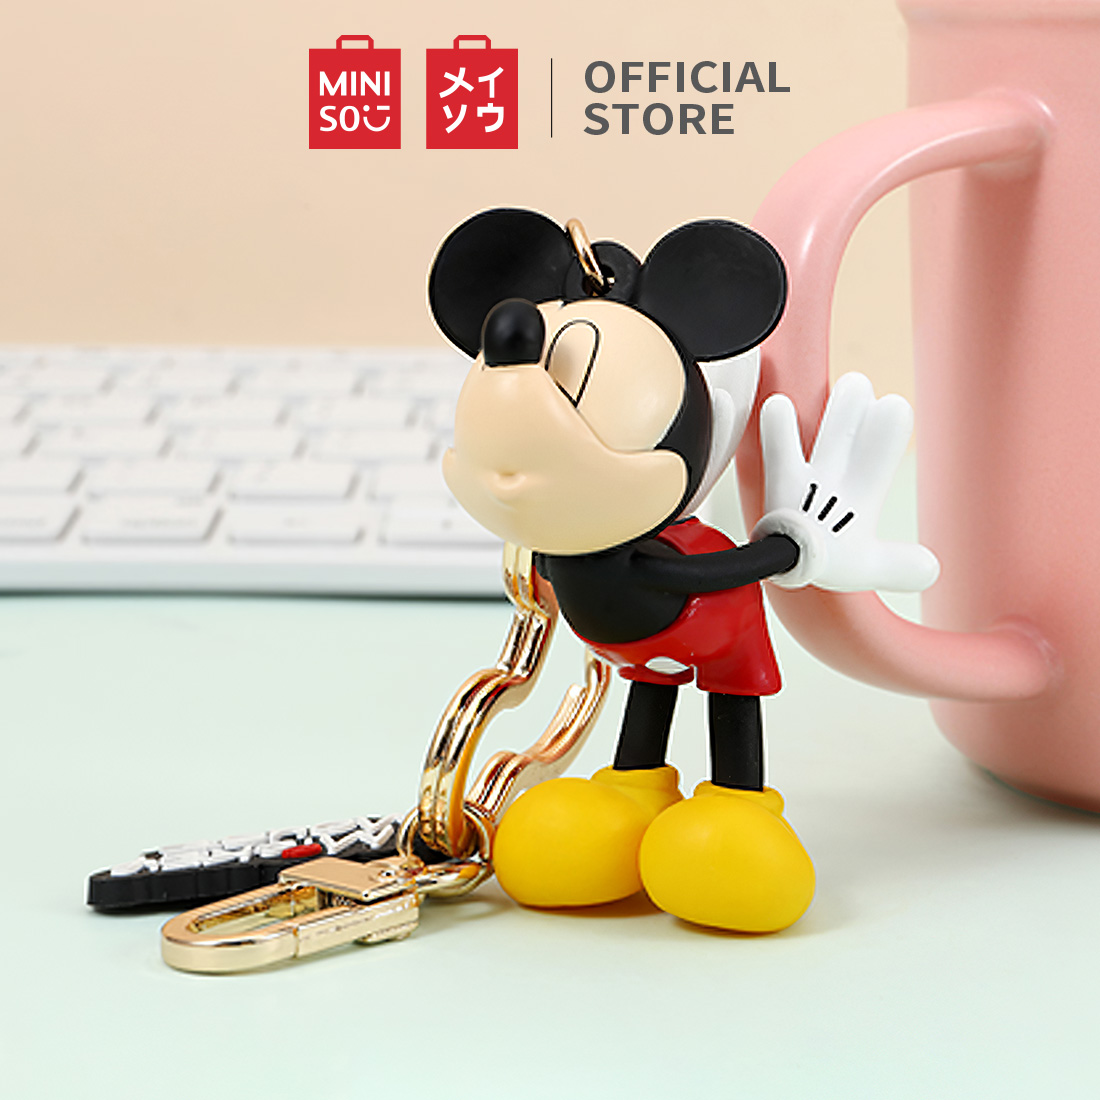 MINISO พวงกุญแจ ตุ๊กตาห้อยกระเป๋า คู่รัก ลาย Mickey Mouse Couple